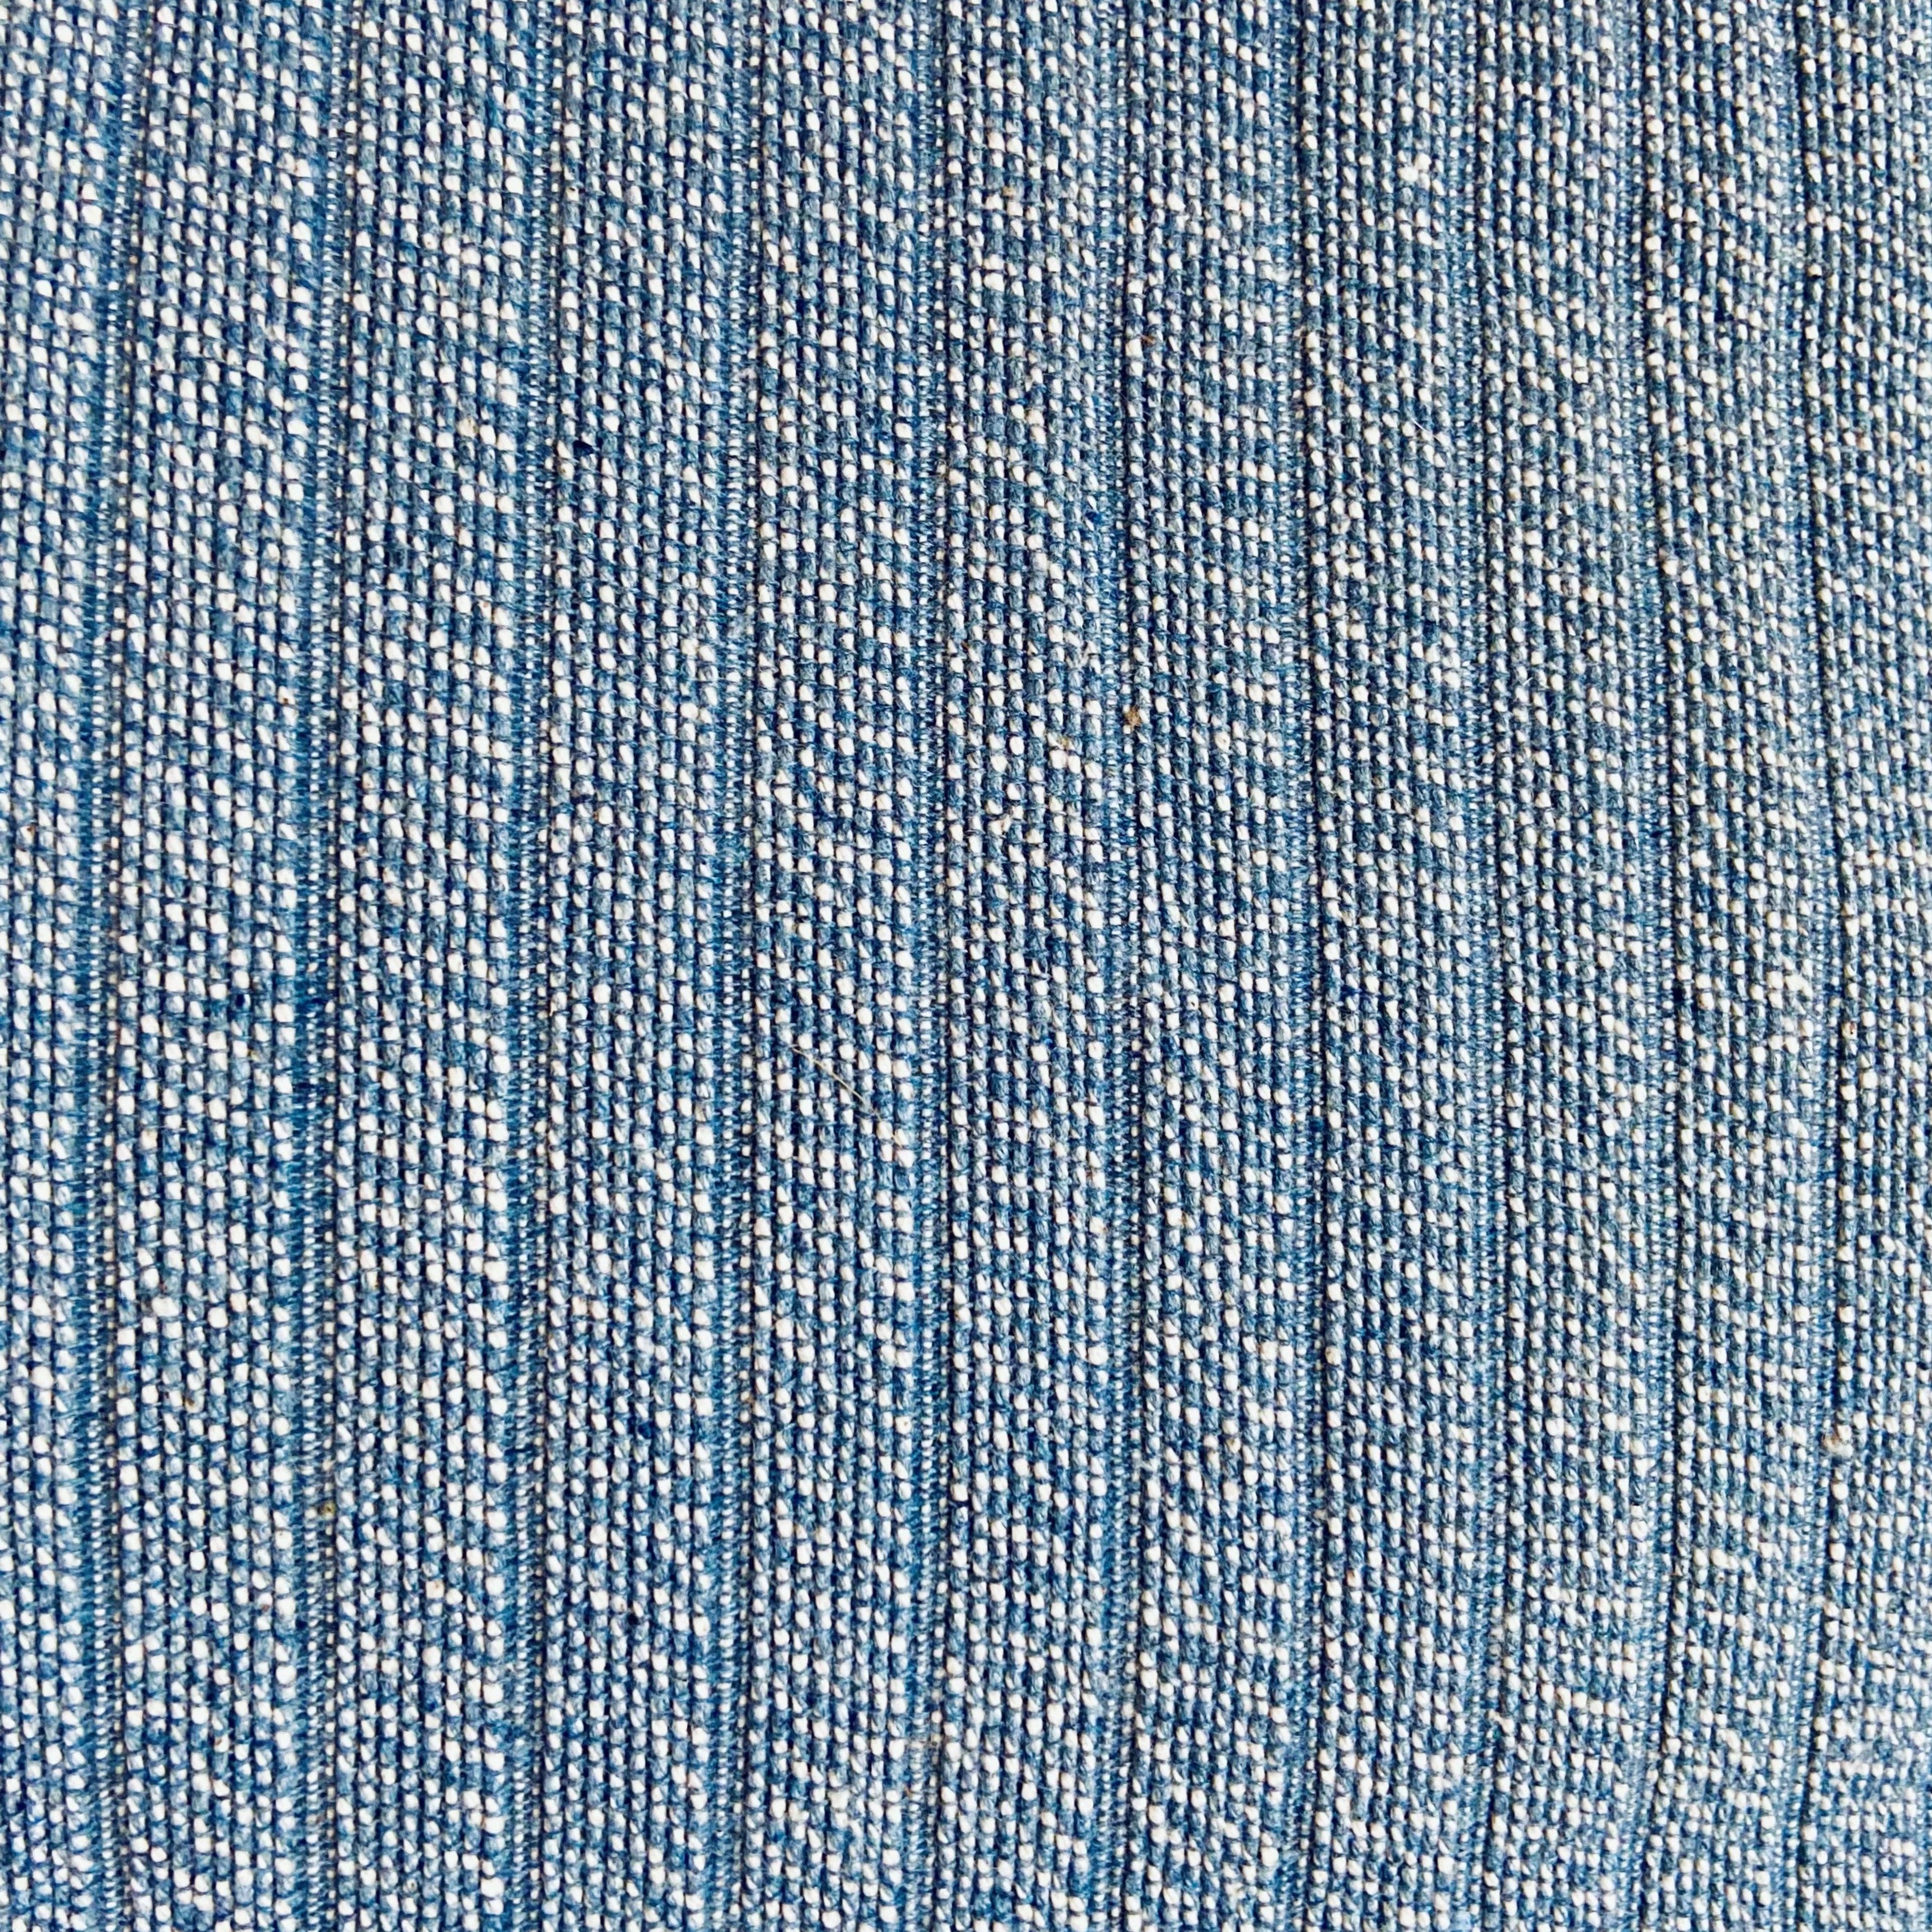 Thin Striped Blue Jeans Denim Throw Pillow | STRIPED DENIM